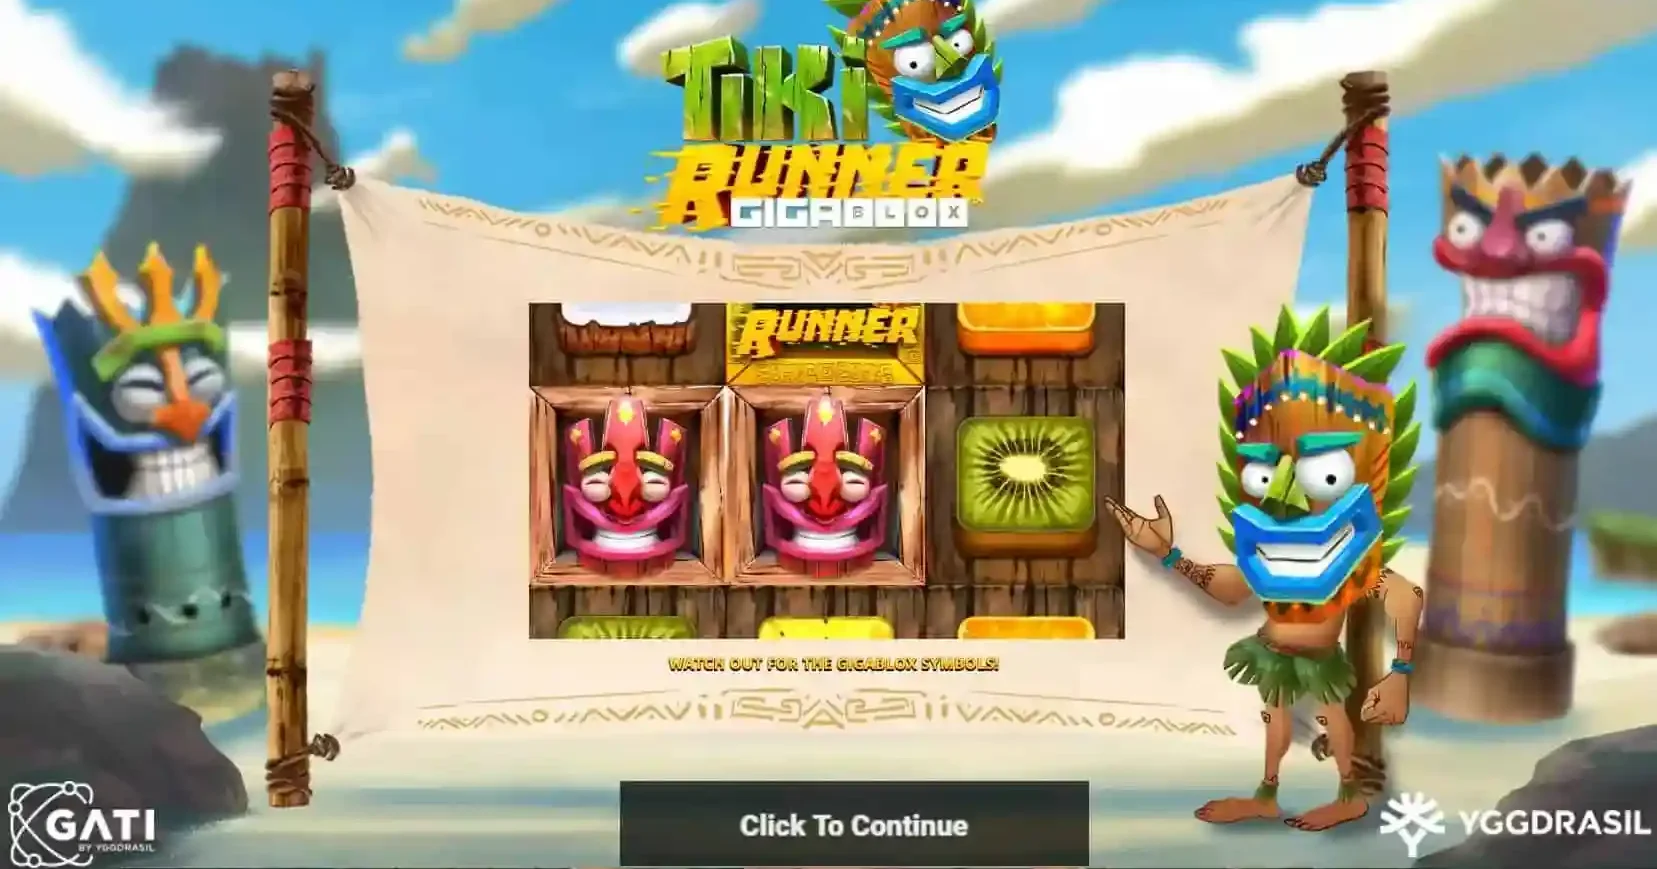 Tiki Runner GigaBlox gameplay